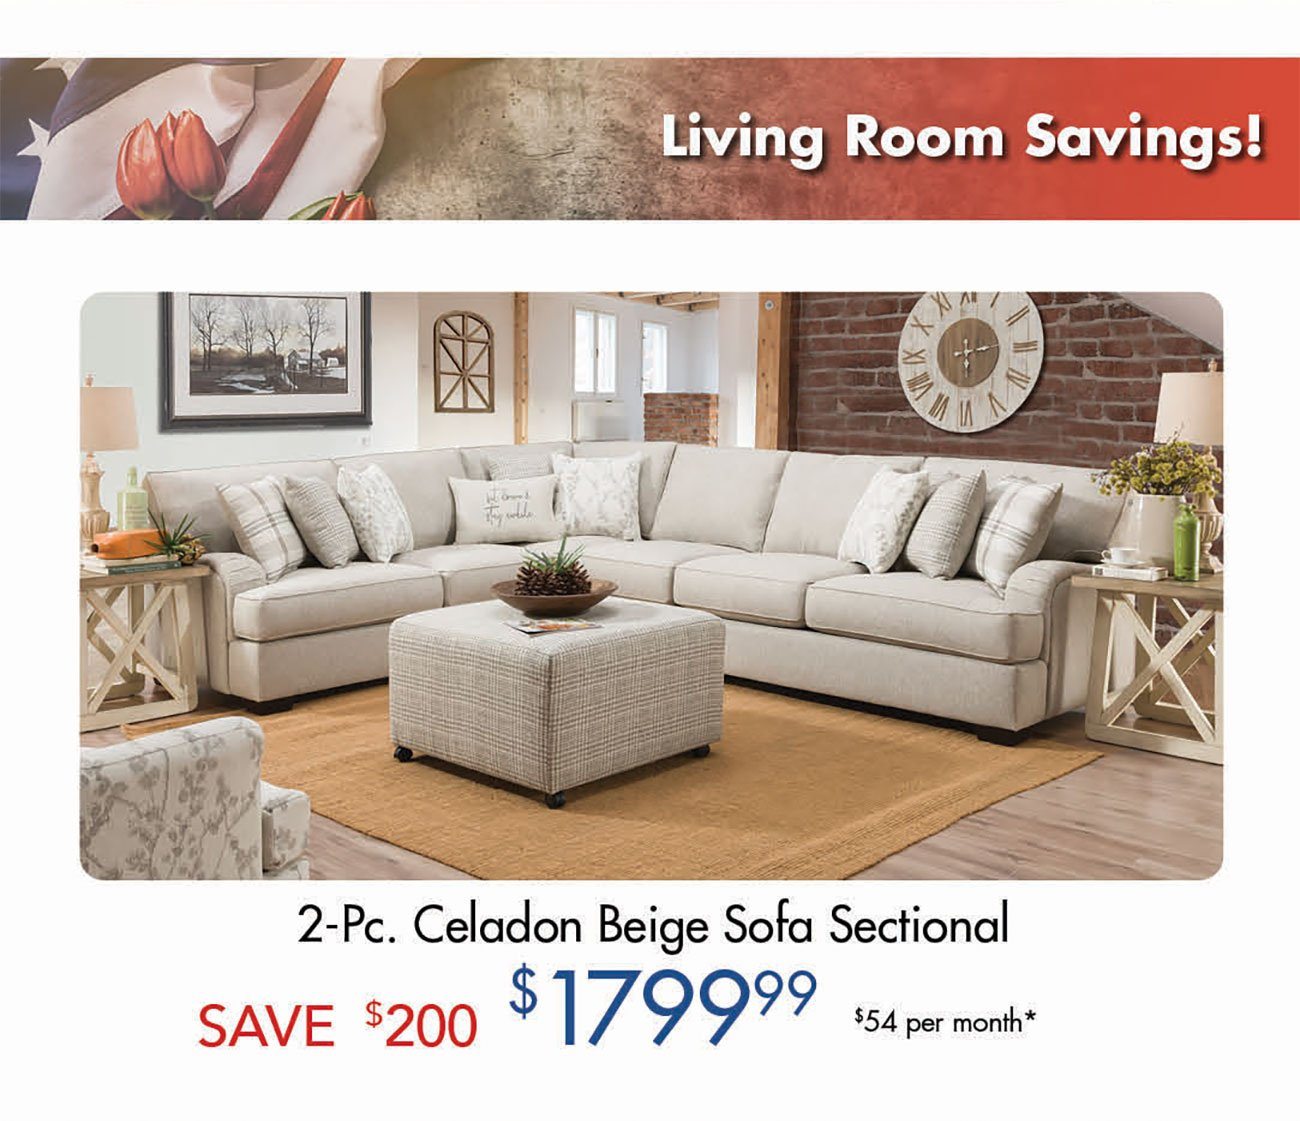 Celdaon-Beige-Sofa-Sectional